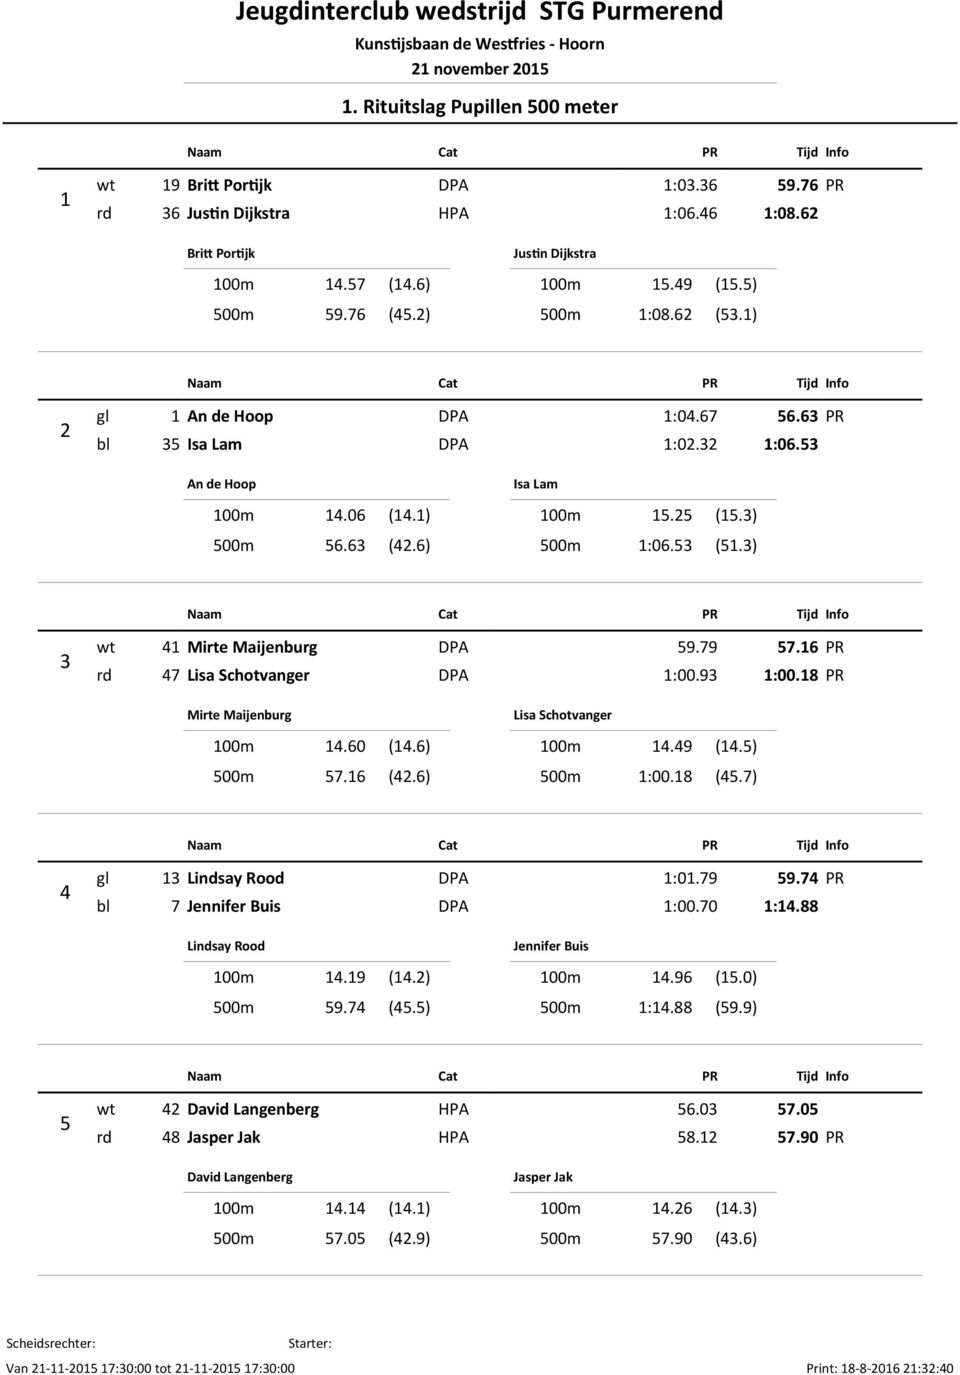 3) 3 wt 41 Mirte Maijenburg DPA 59.79 57.16 rd 47 Lisa Schotvanger DPA 1:00.93 1:00.18 Mirte Maijenburg 100m 14.60 (14.6) 500m 57.16 (42.6) Lisa Schotvanger 100m 14.49 (14.5) 500m 1:00.18 (45.